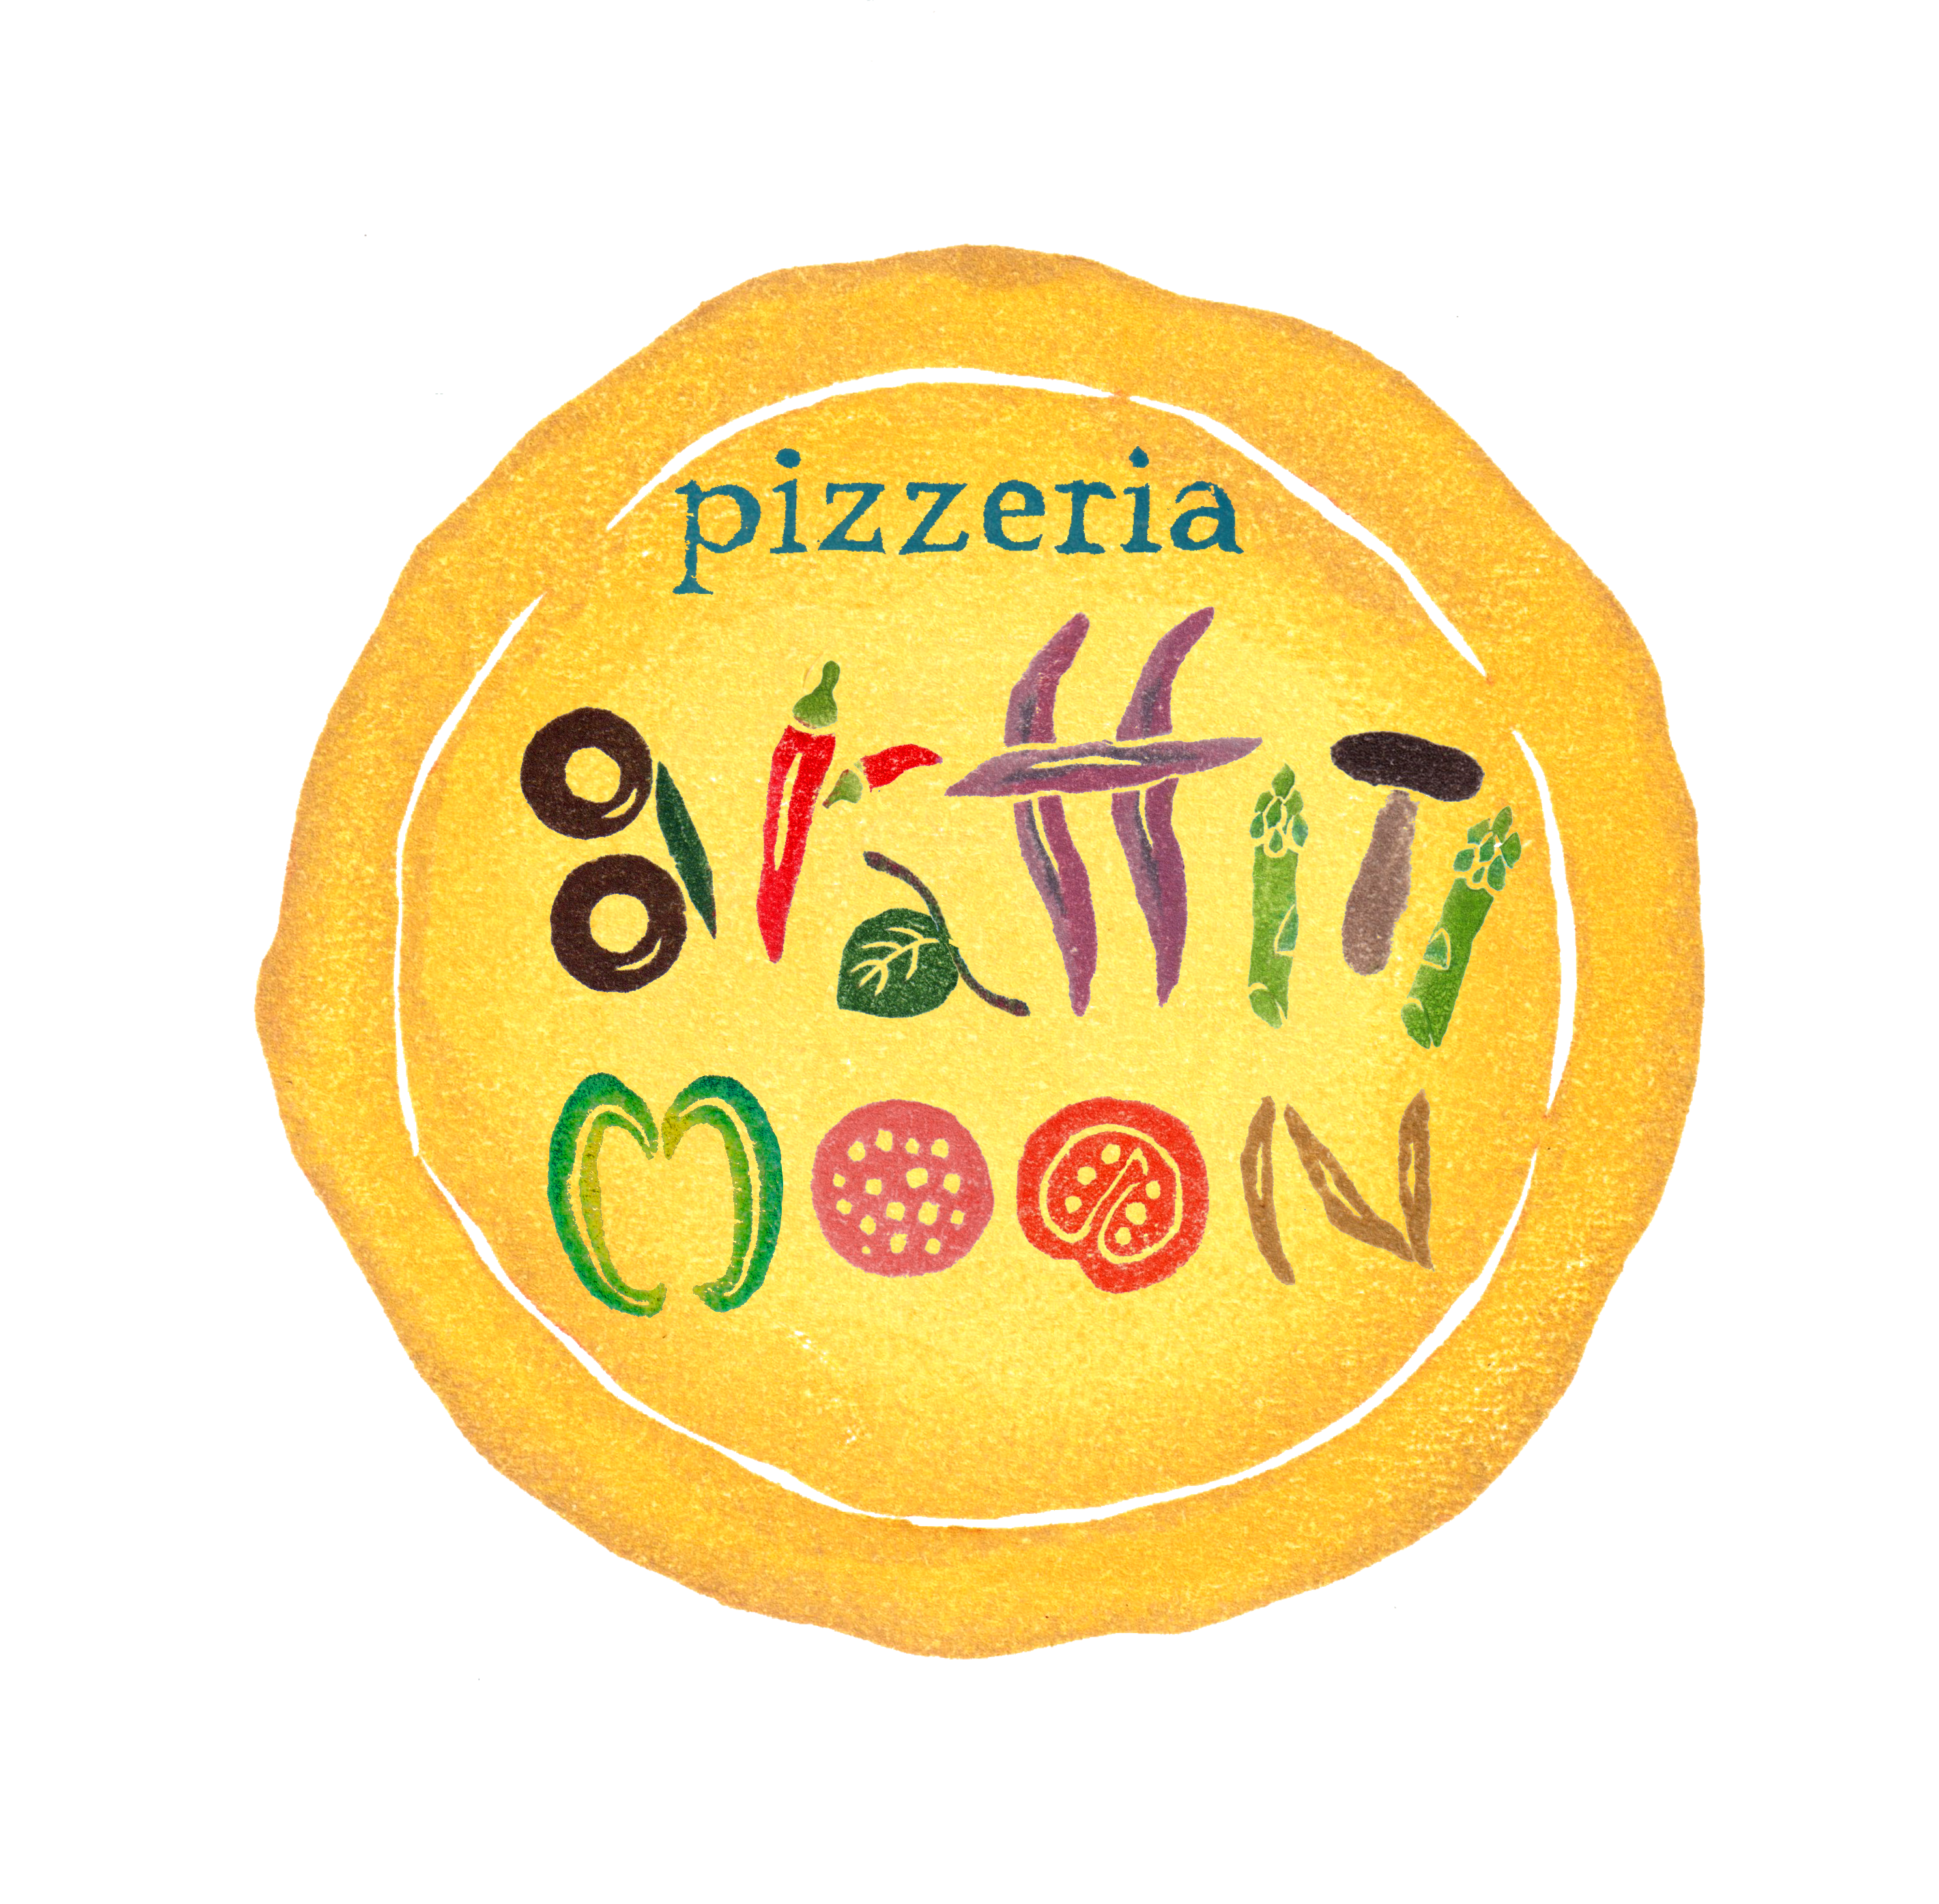 Pizzeria Graffiti Moon 消しゴムはんこ 津久井智子 作り方レッスン動画 材料 作品の通販